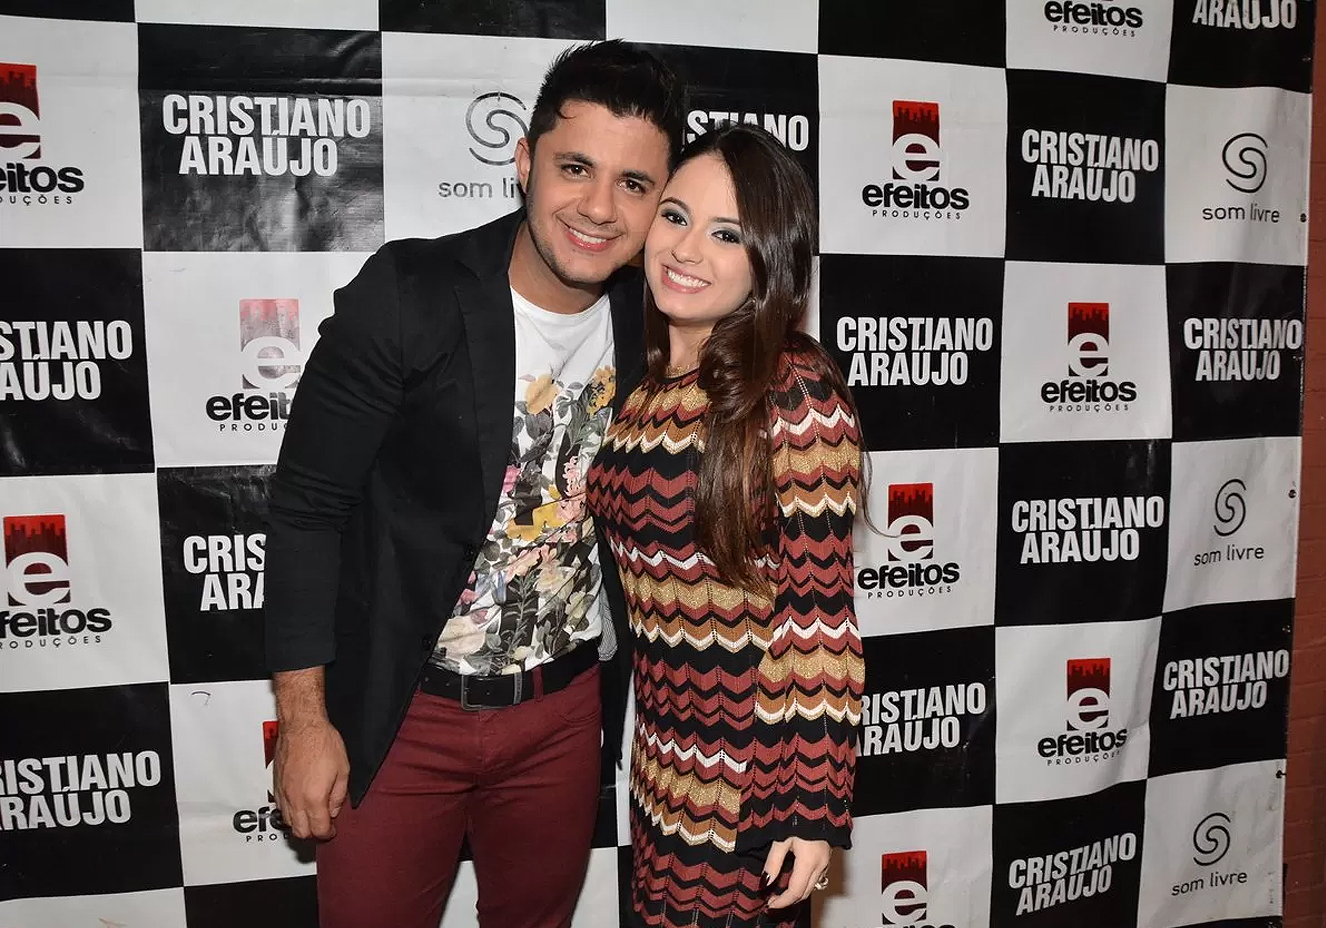 Foto: Cristiano Araújo estava acompanhado da namorada, Allana